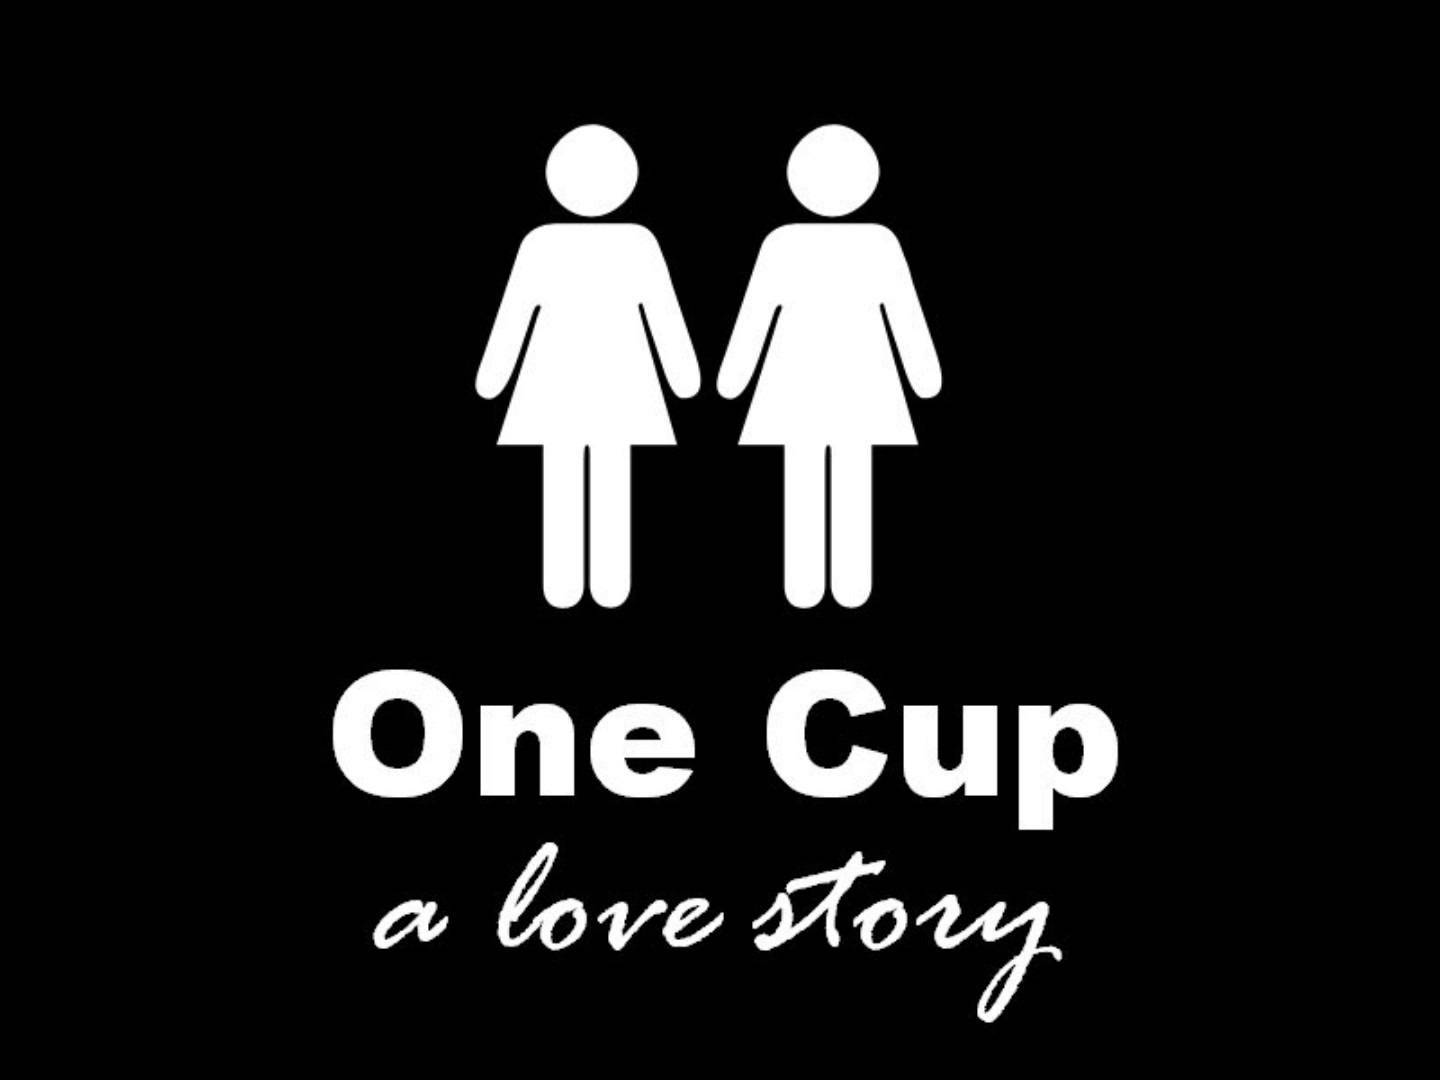 2 girlz one cup